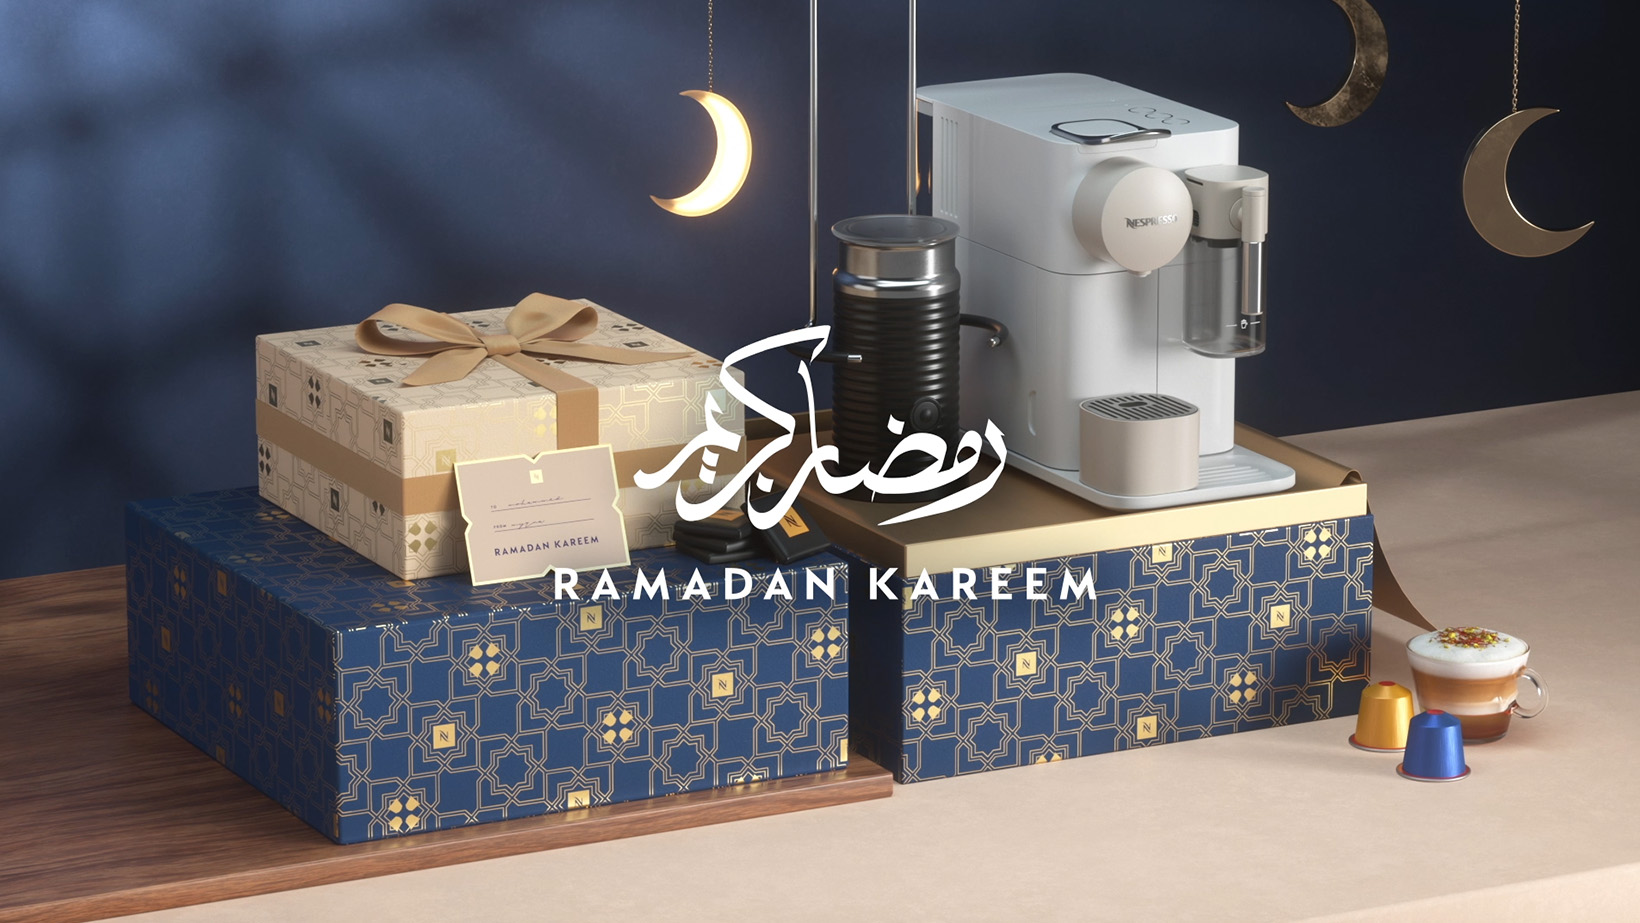 Nespresso Ramadan